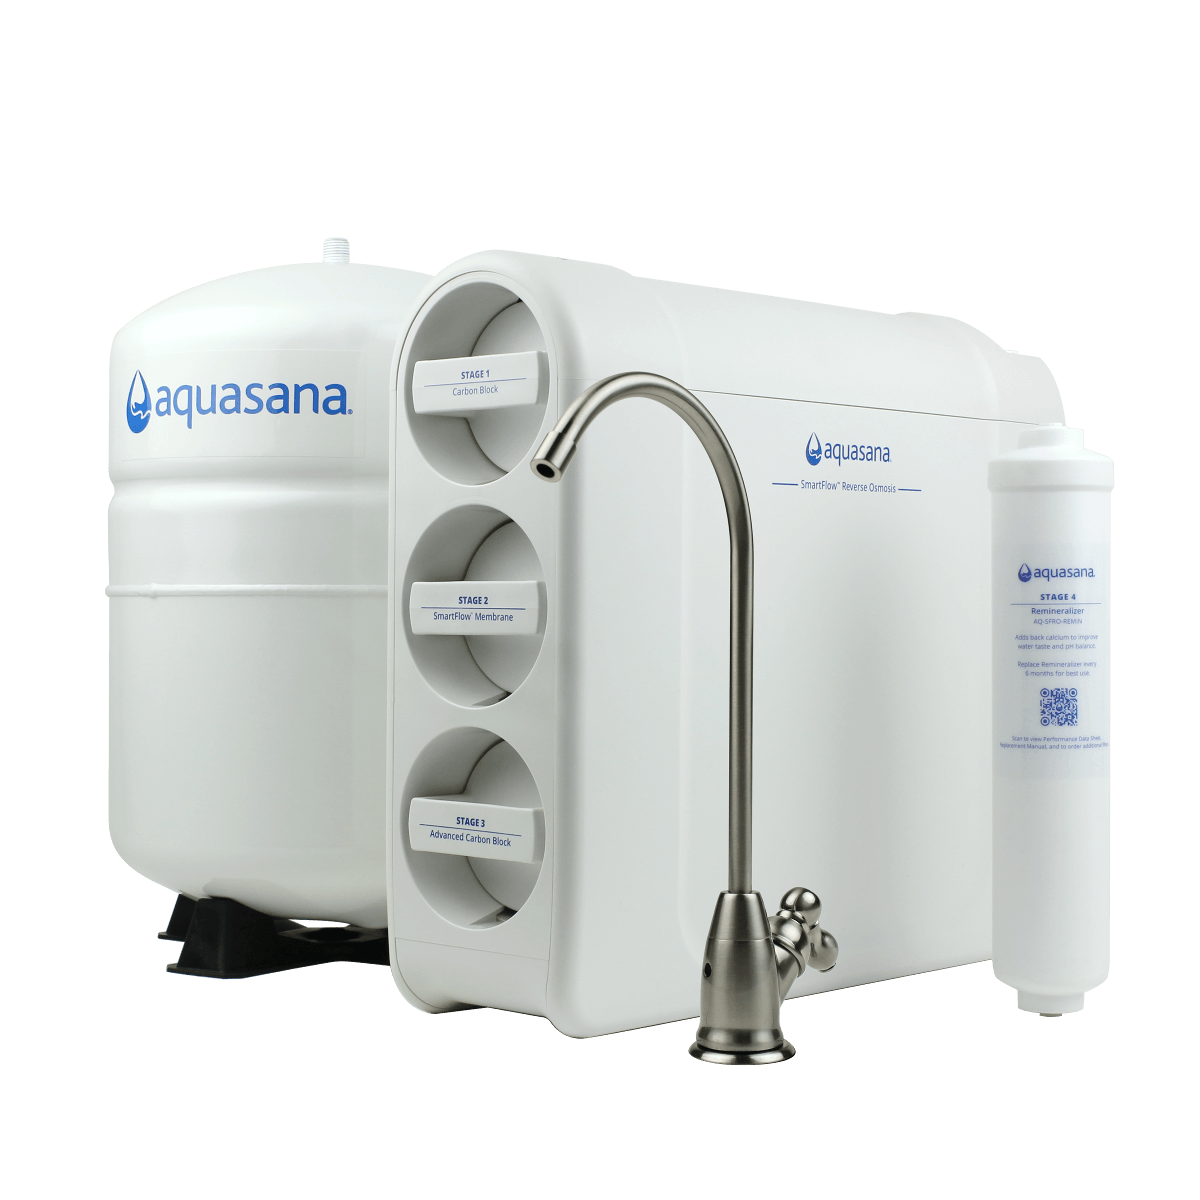 SmartFlow™ Reverse Osmosis Water Filter | Aquasana